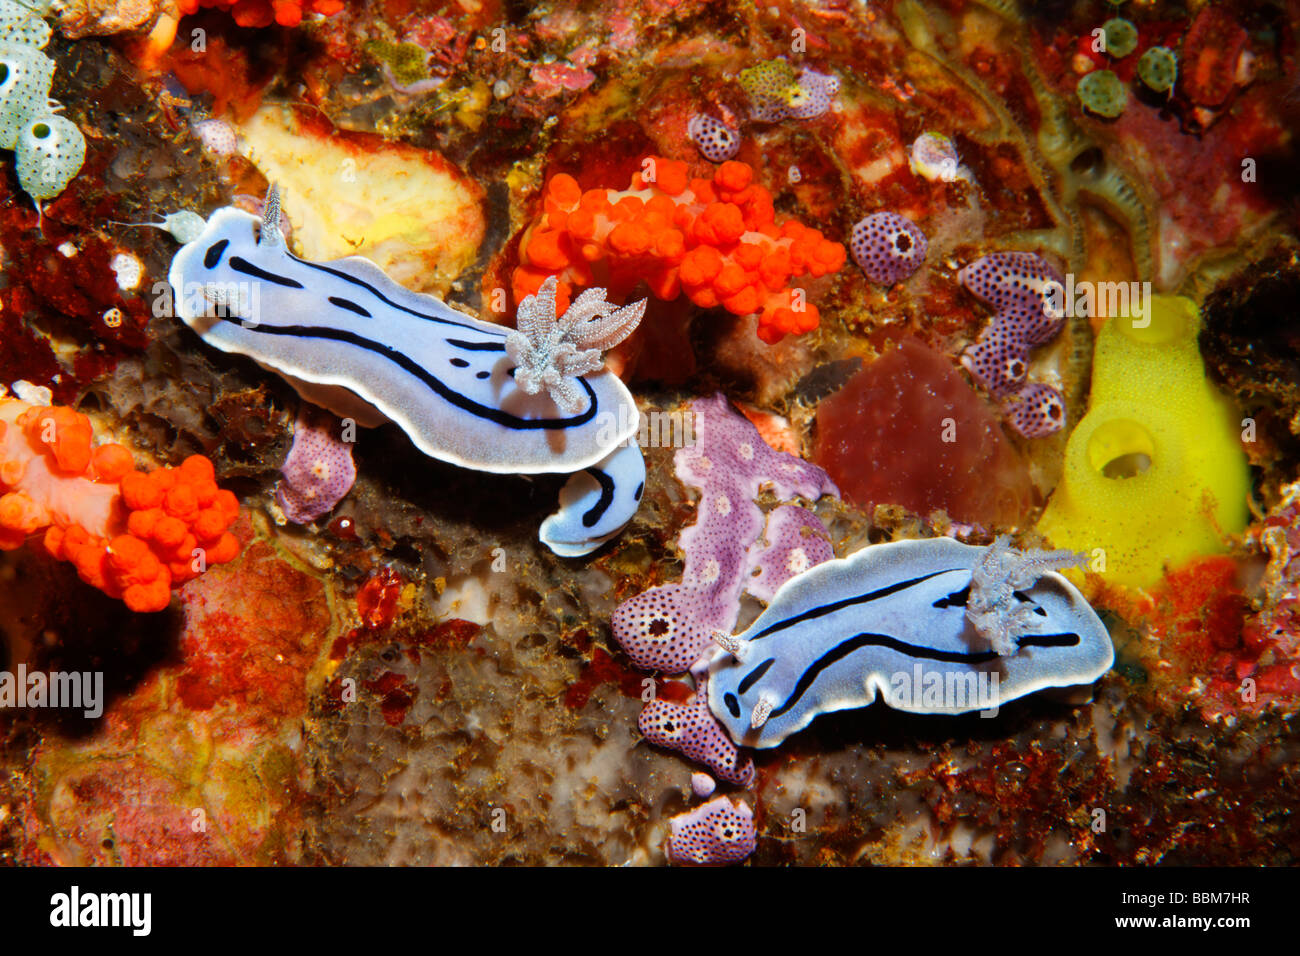 Chromodoris Nudibranches (Chromodoris willani) prefer to live between softcorals and tunicates at the coral reef, Gangga Island Stock Photo